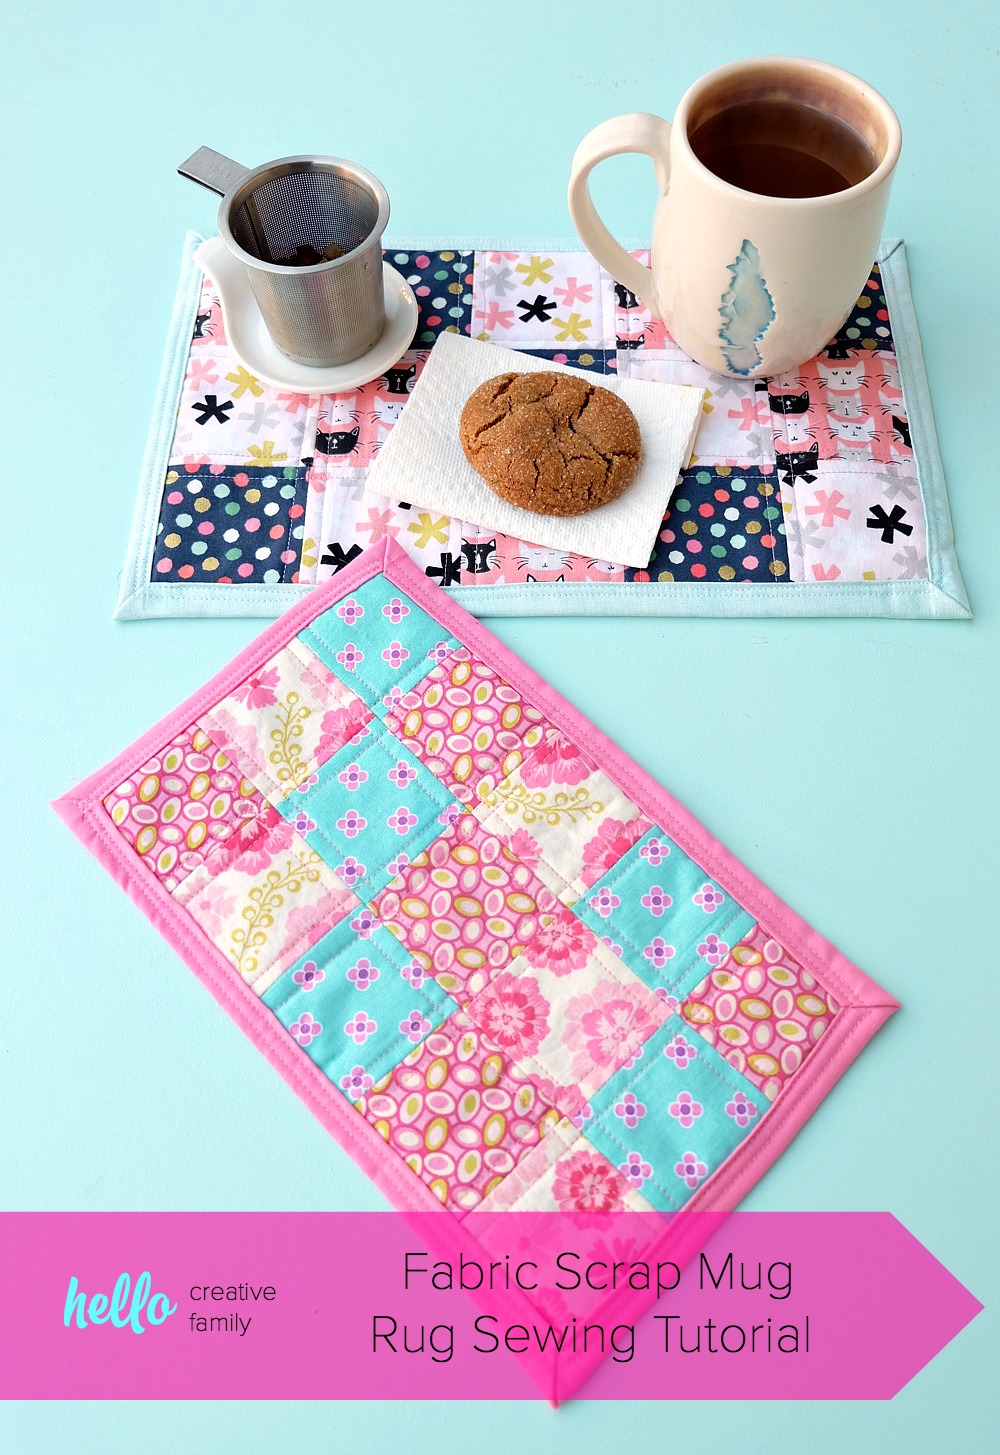 50 Easy Handmade Gift Ideas You'll Love: Fabric Scrap Mug Rug Sewing Tutorial